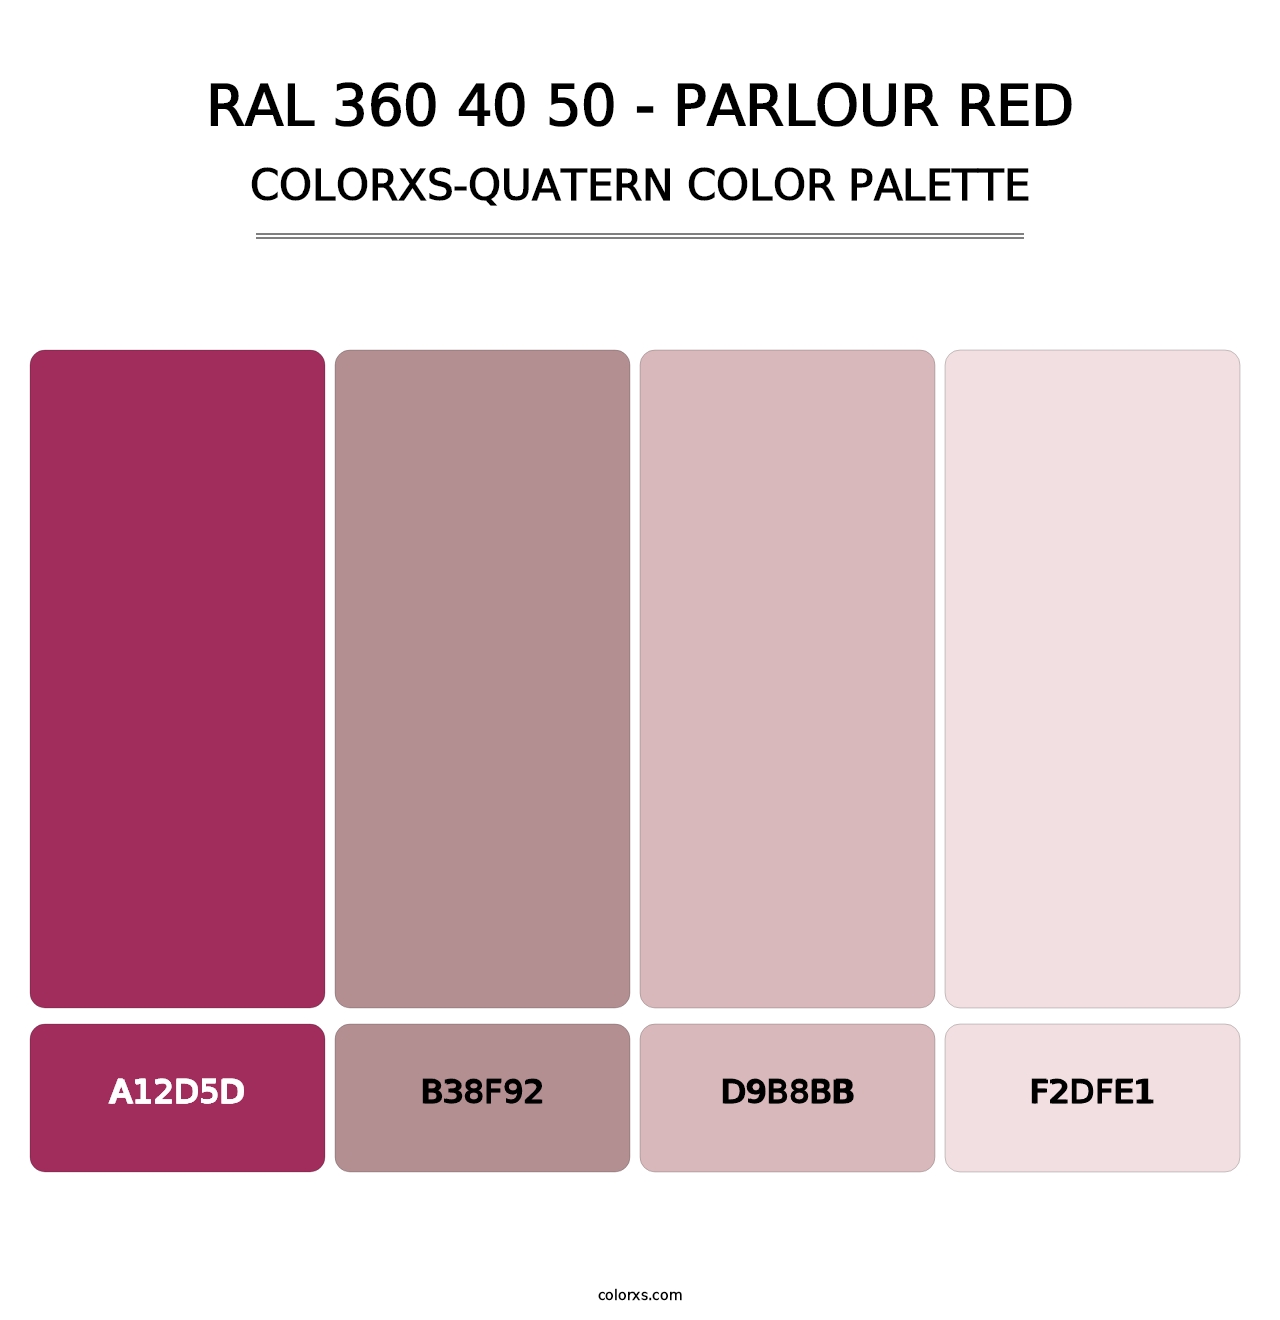 RAL 360 40 50 - Parlour Red - Colorxs Quatern Palette